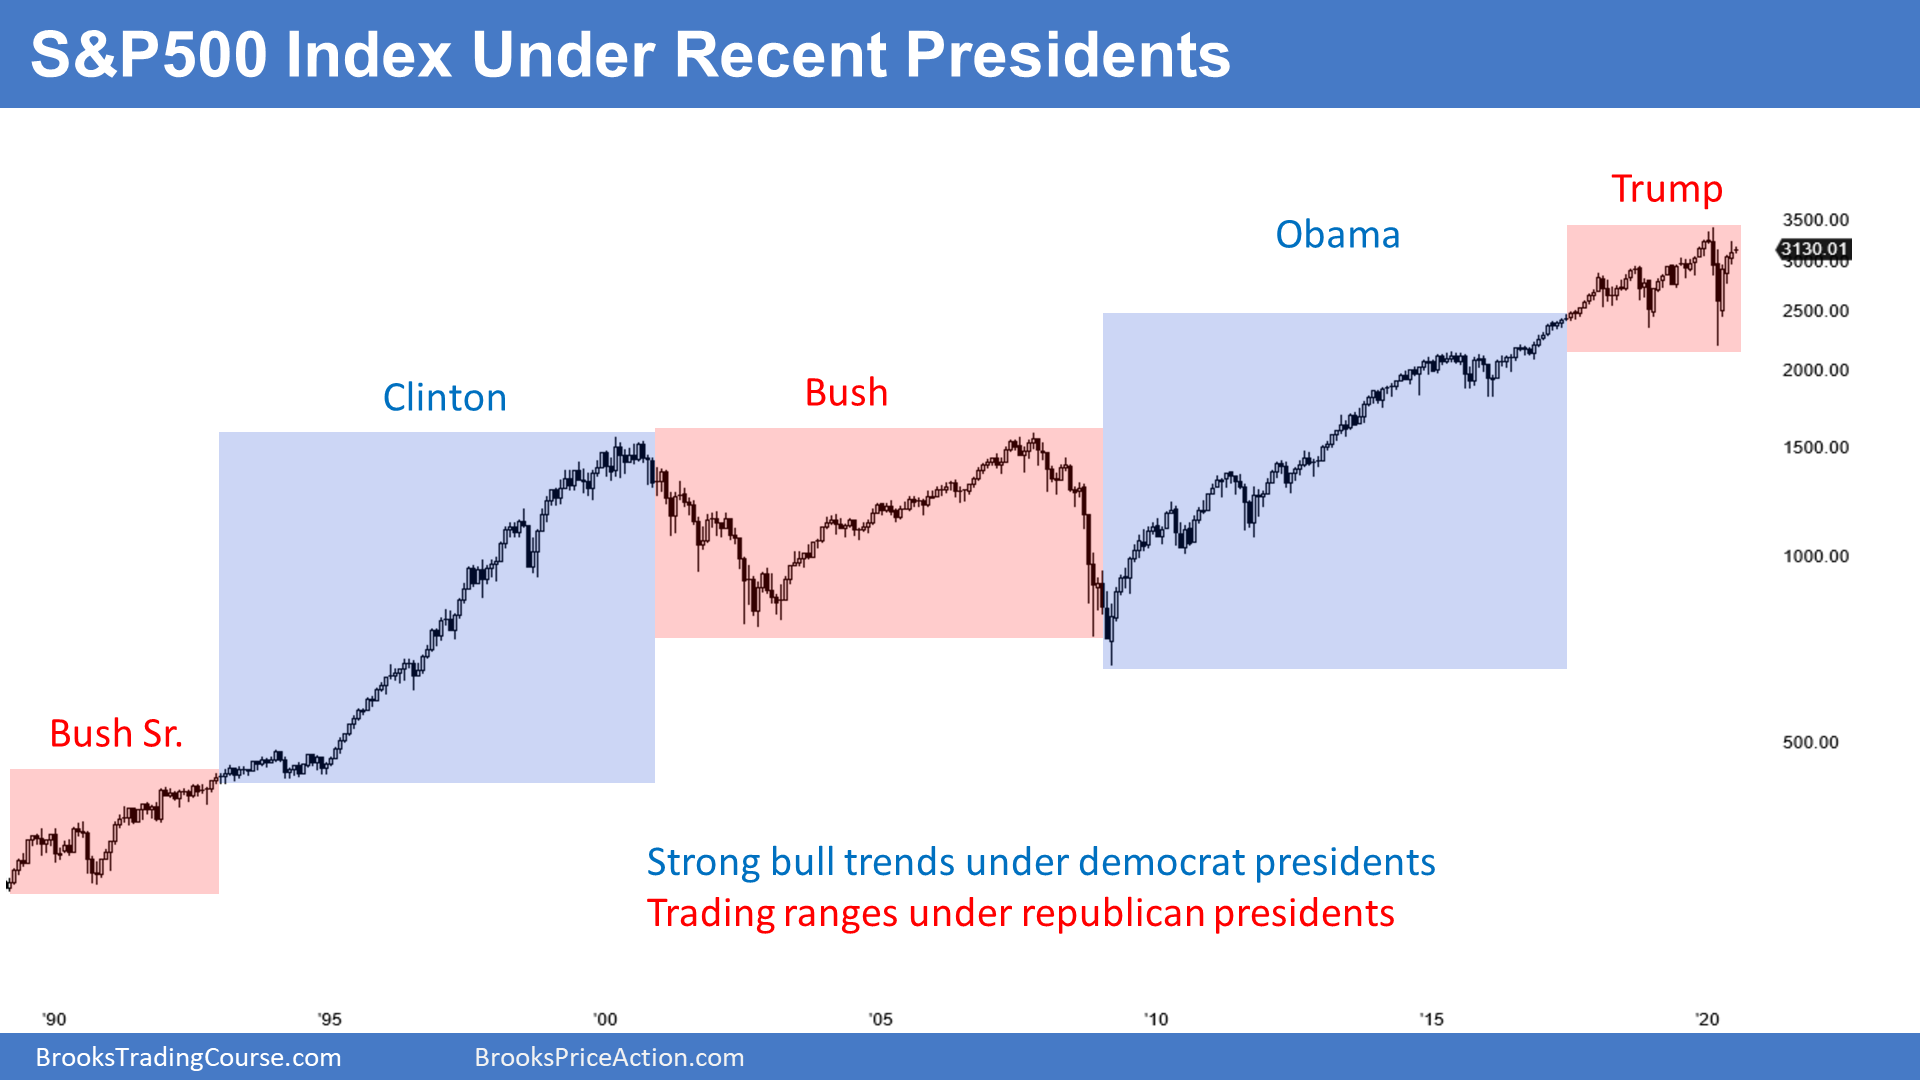 S&P 500 Index Under Recent Presidents